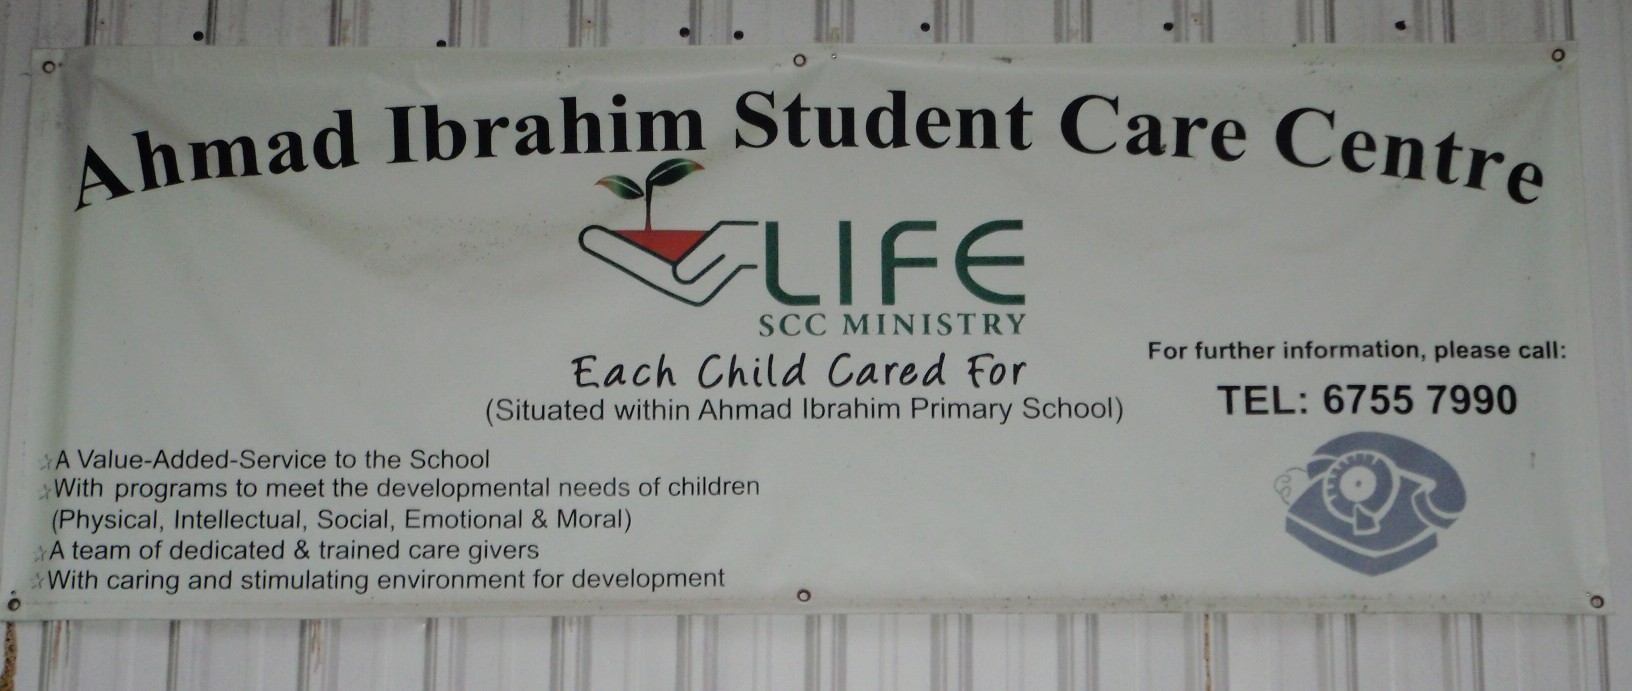 Student Care Centre